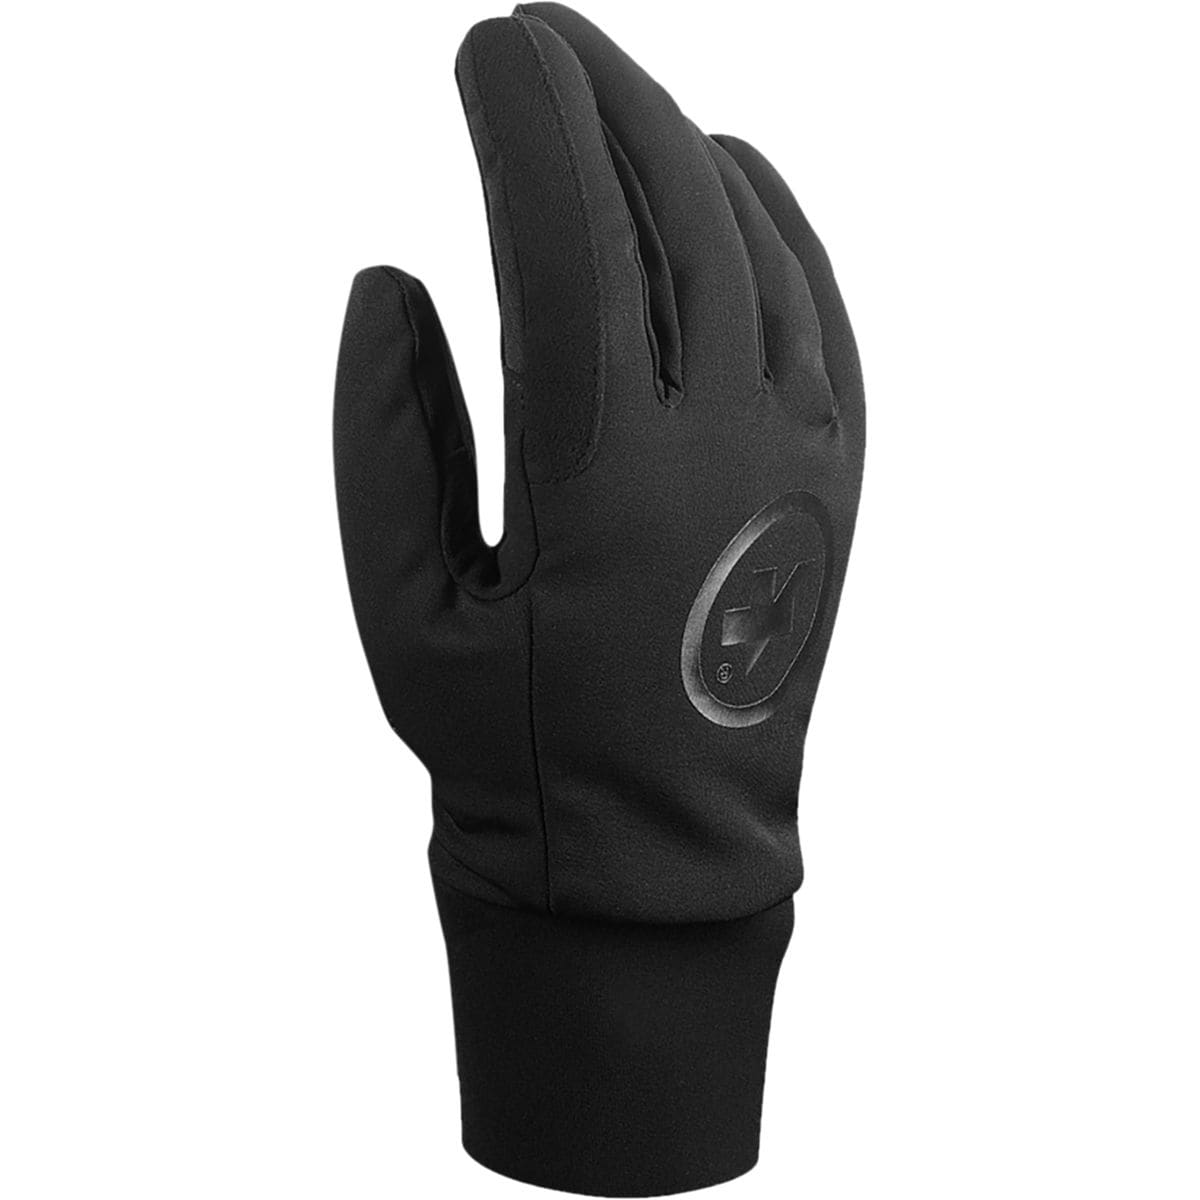 Assos Men's Gloves | Competitive Cyclist